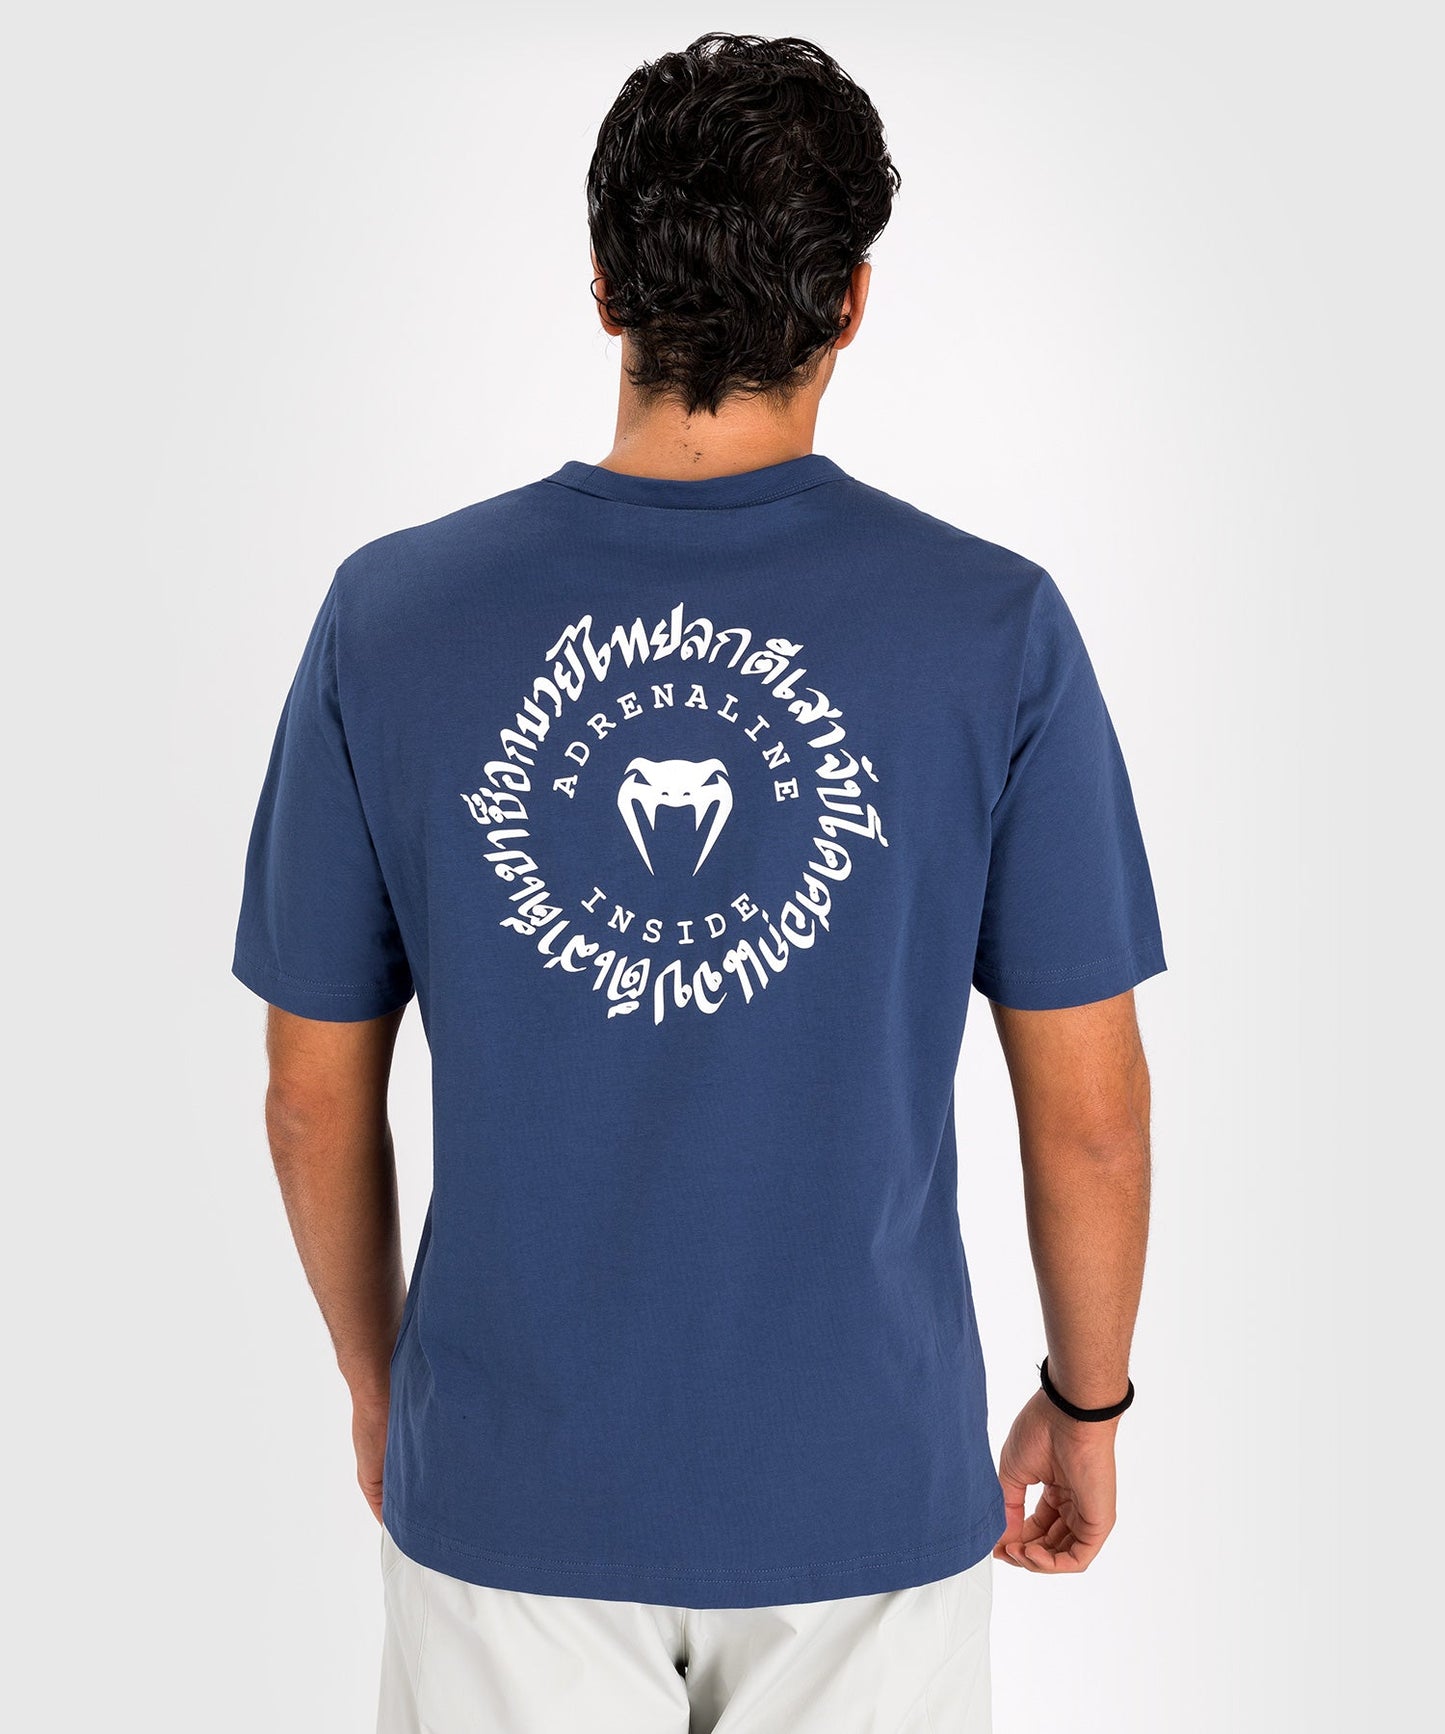 Venum Strikeland  T-Shirt - Navy Blue